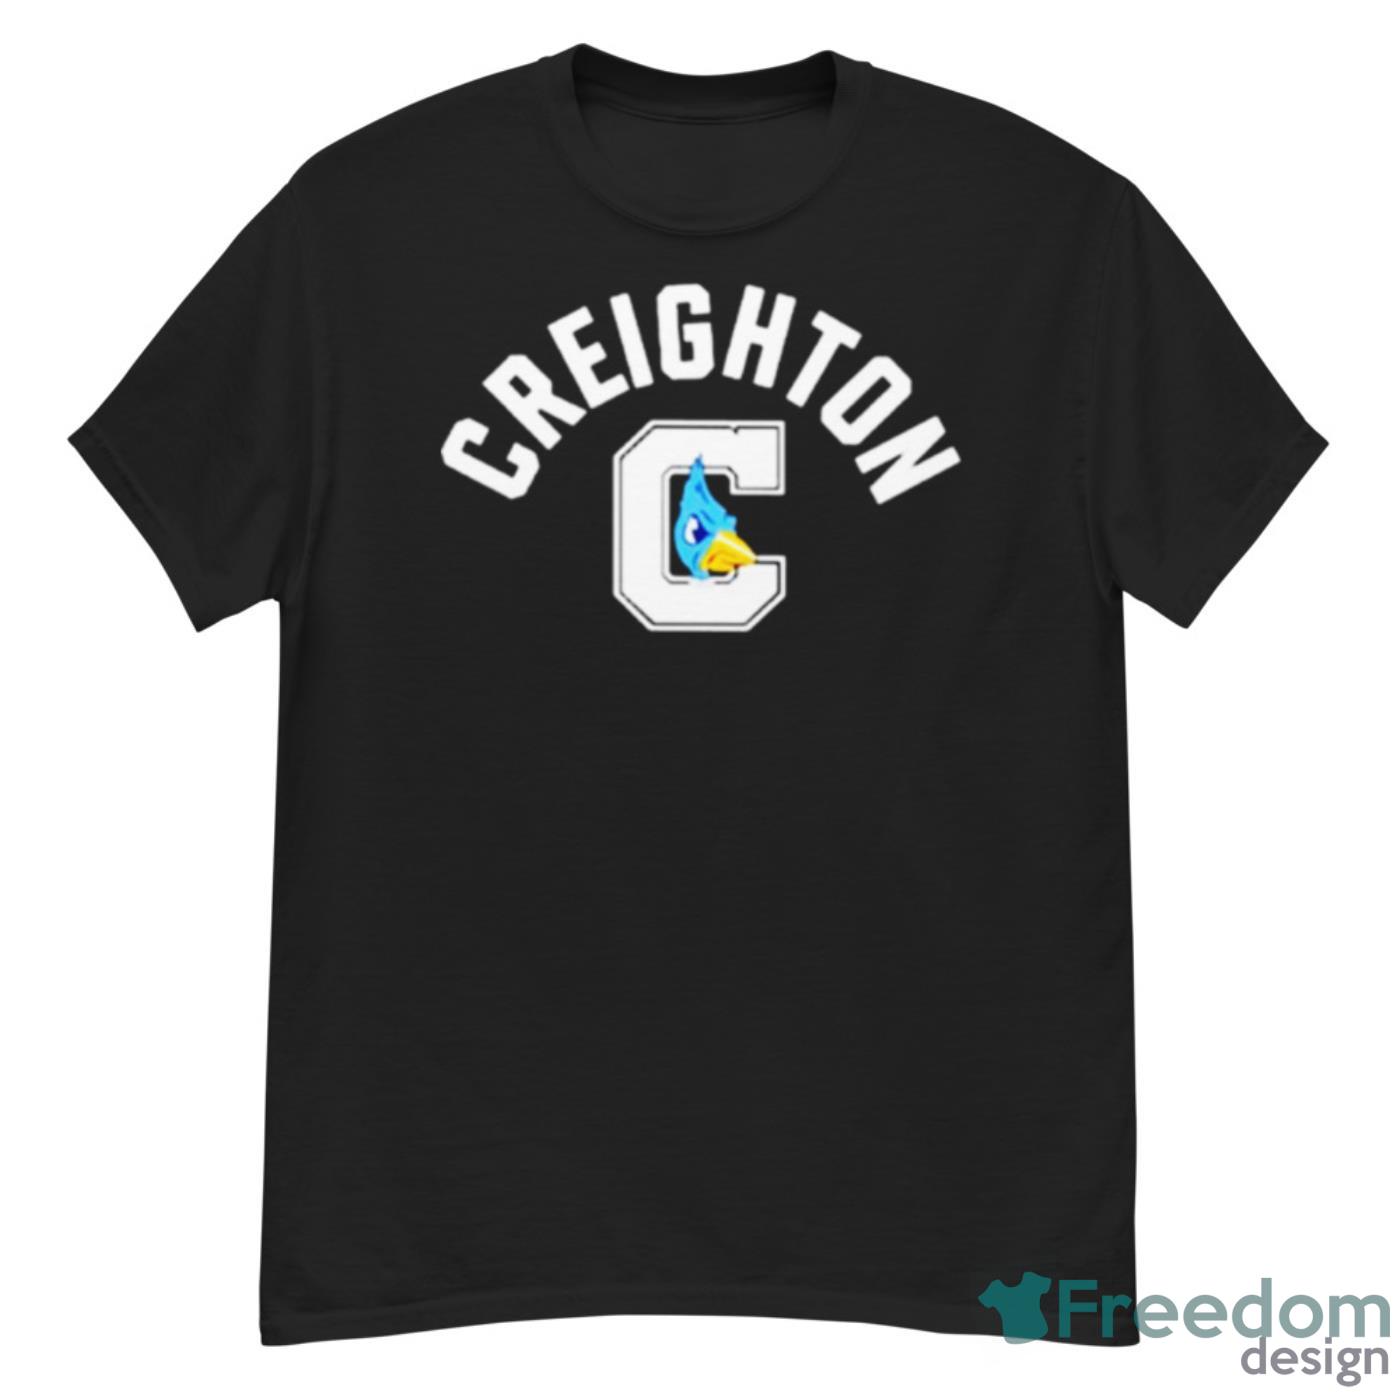 Creighton Bluejays Vintage Shirt - Freedomdesign